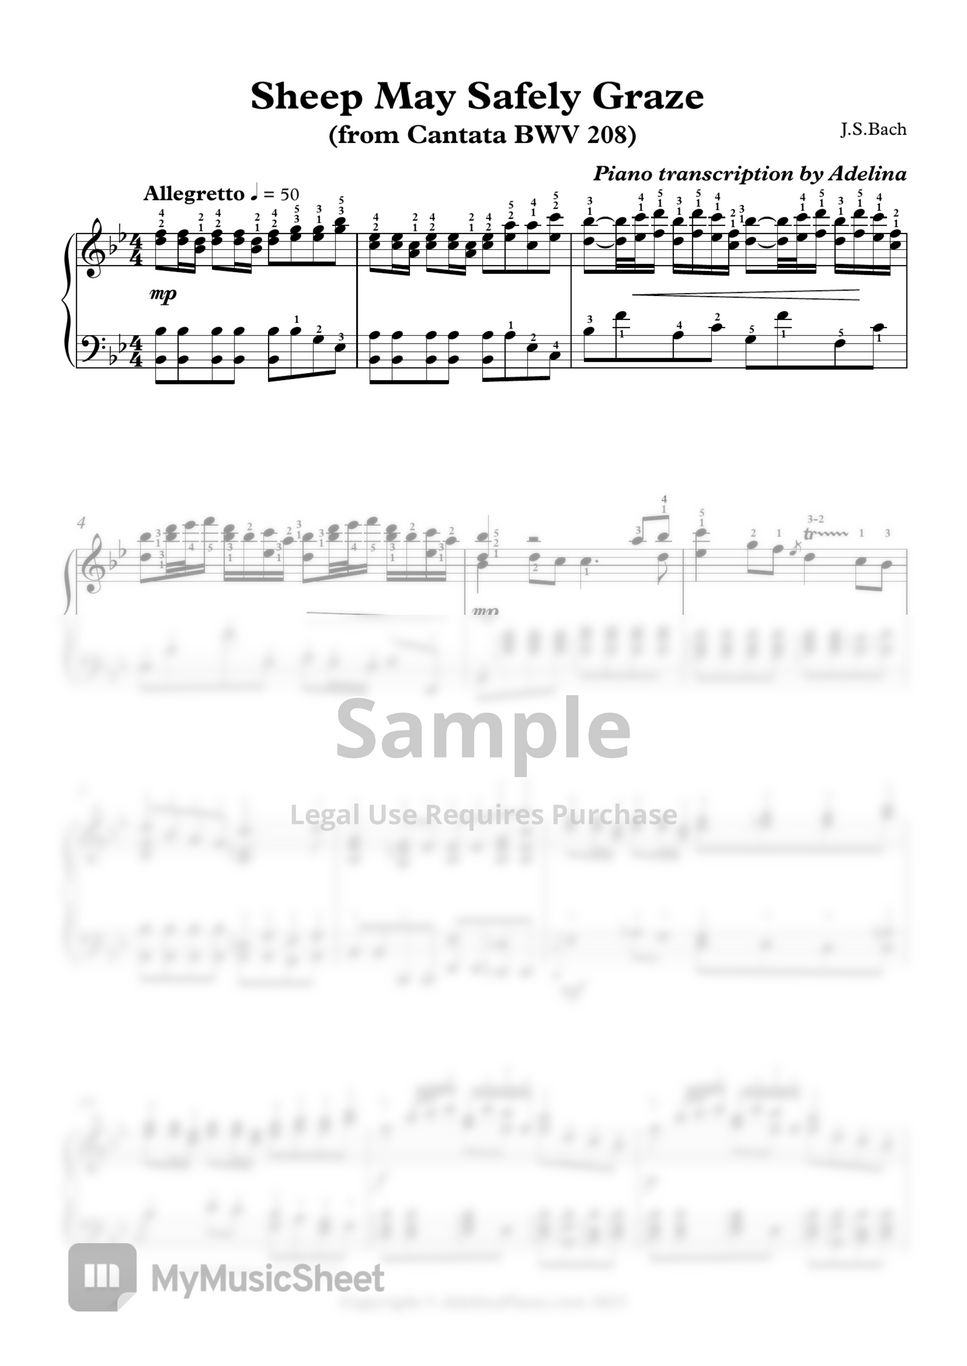 J.S.Bach - Sheep May Safely Graze (Cantata BWV 208) by Adelina Piano